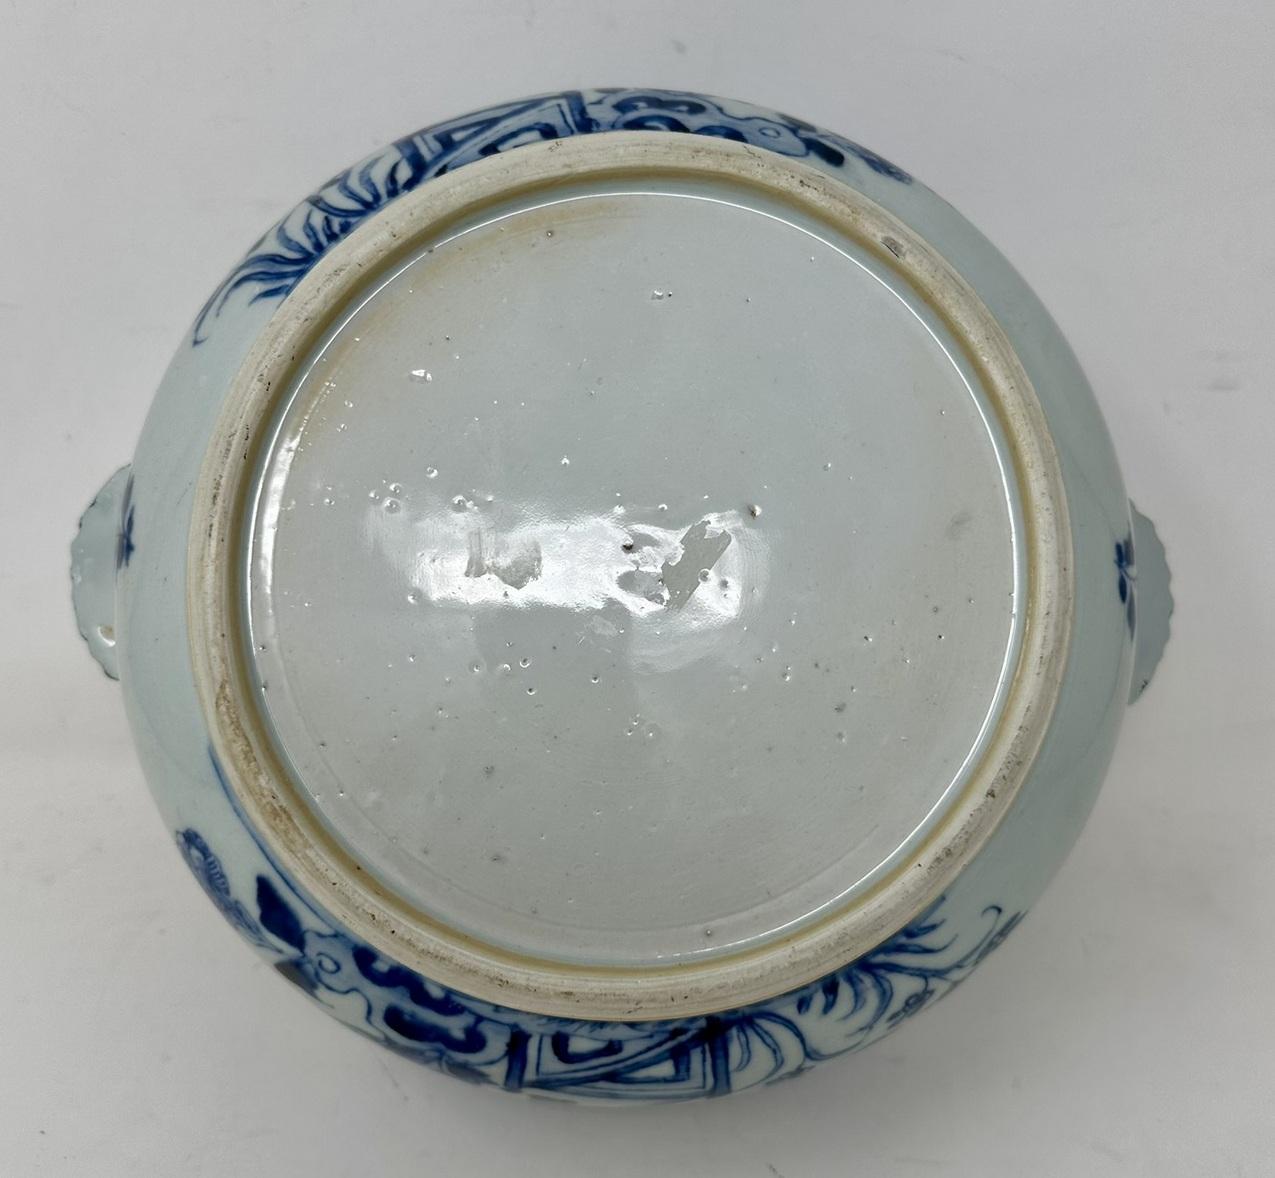 Antique Chinese Export Porcelain Blue White Chien Lung Soup Tureen Centerpiece For Sale 4